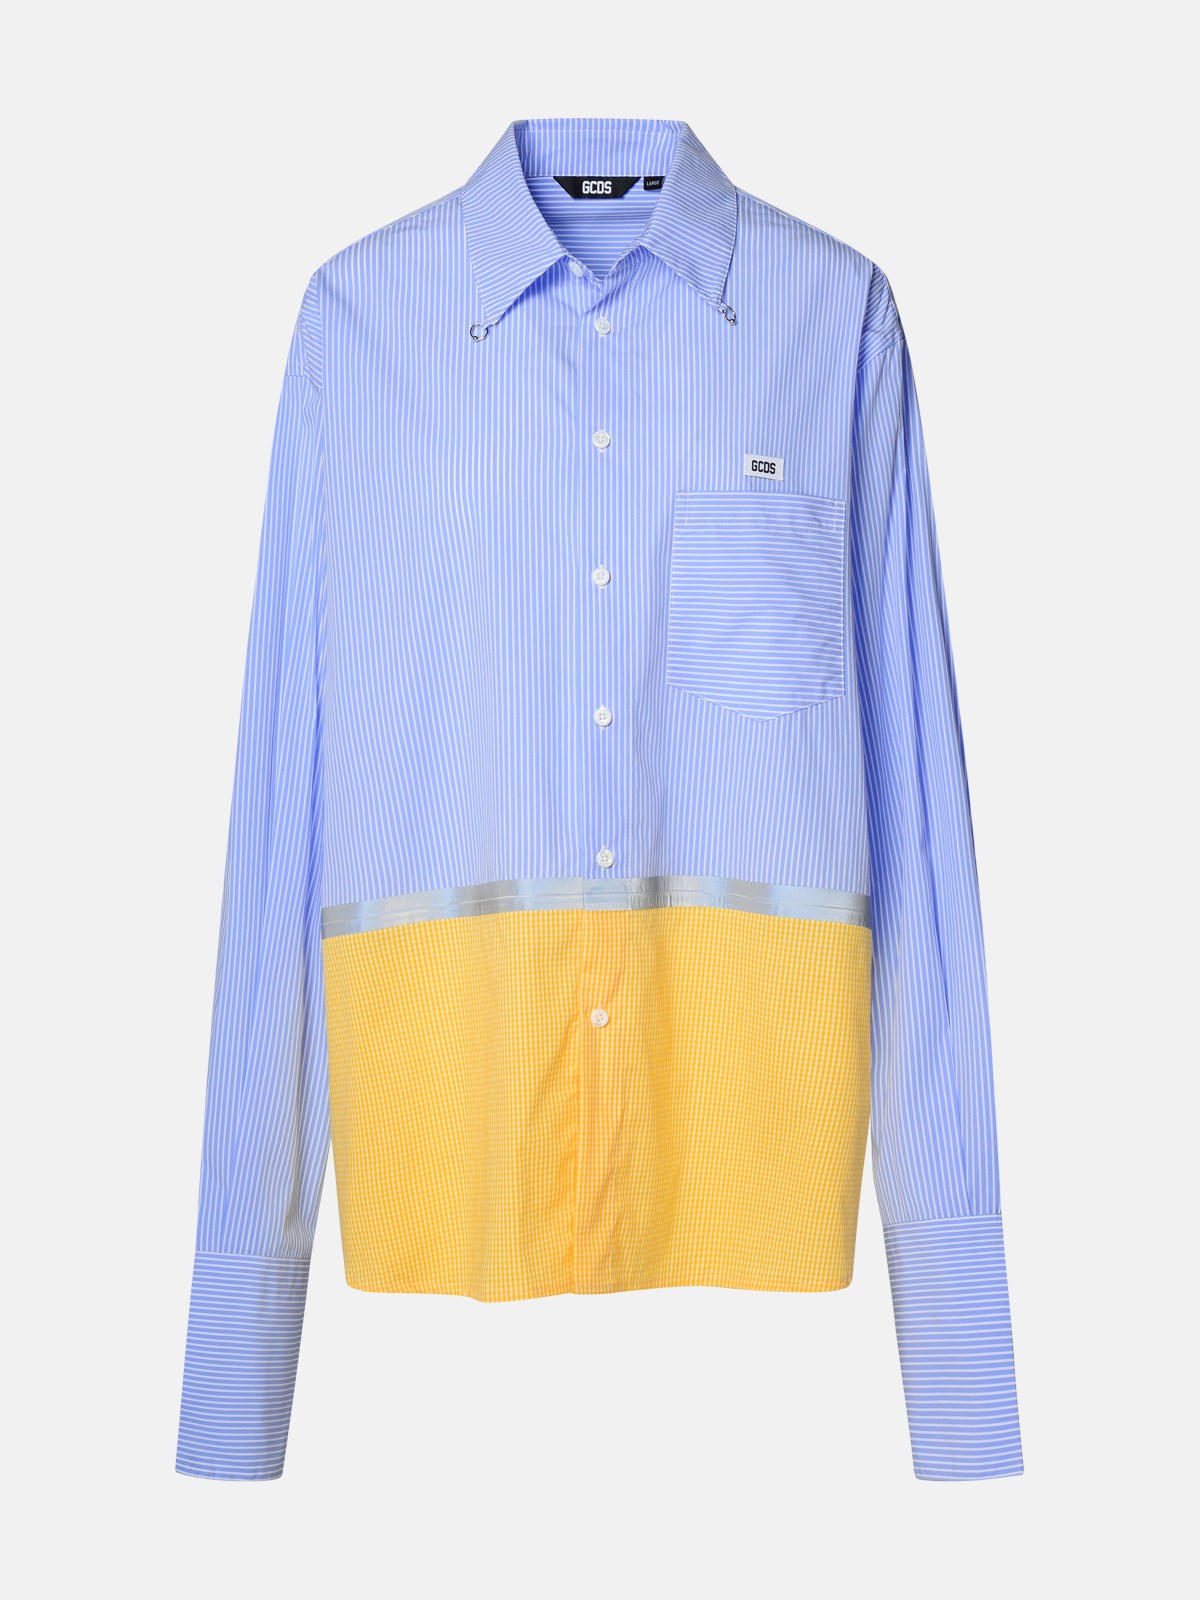 Gcds Multicolor Cotton Blend Shirt In Light Blue